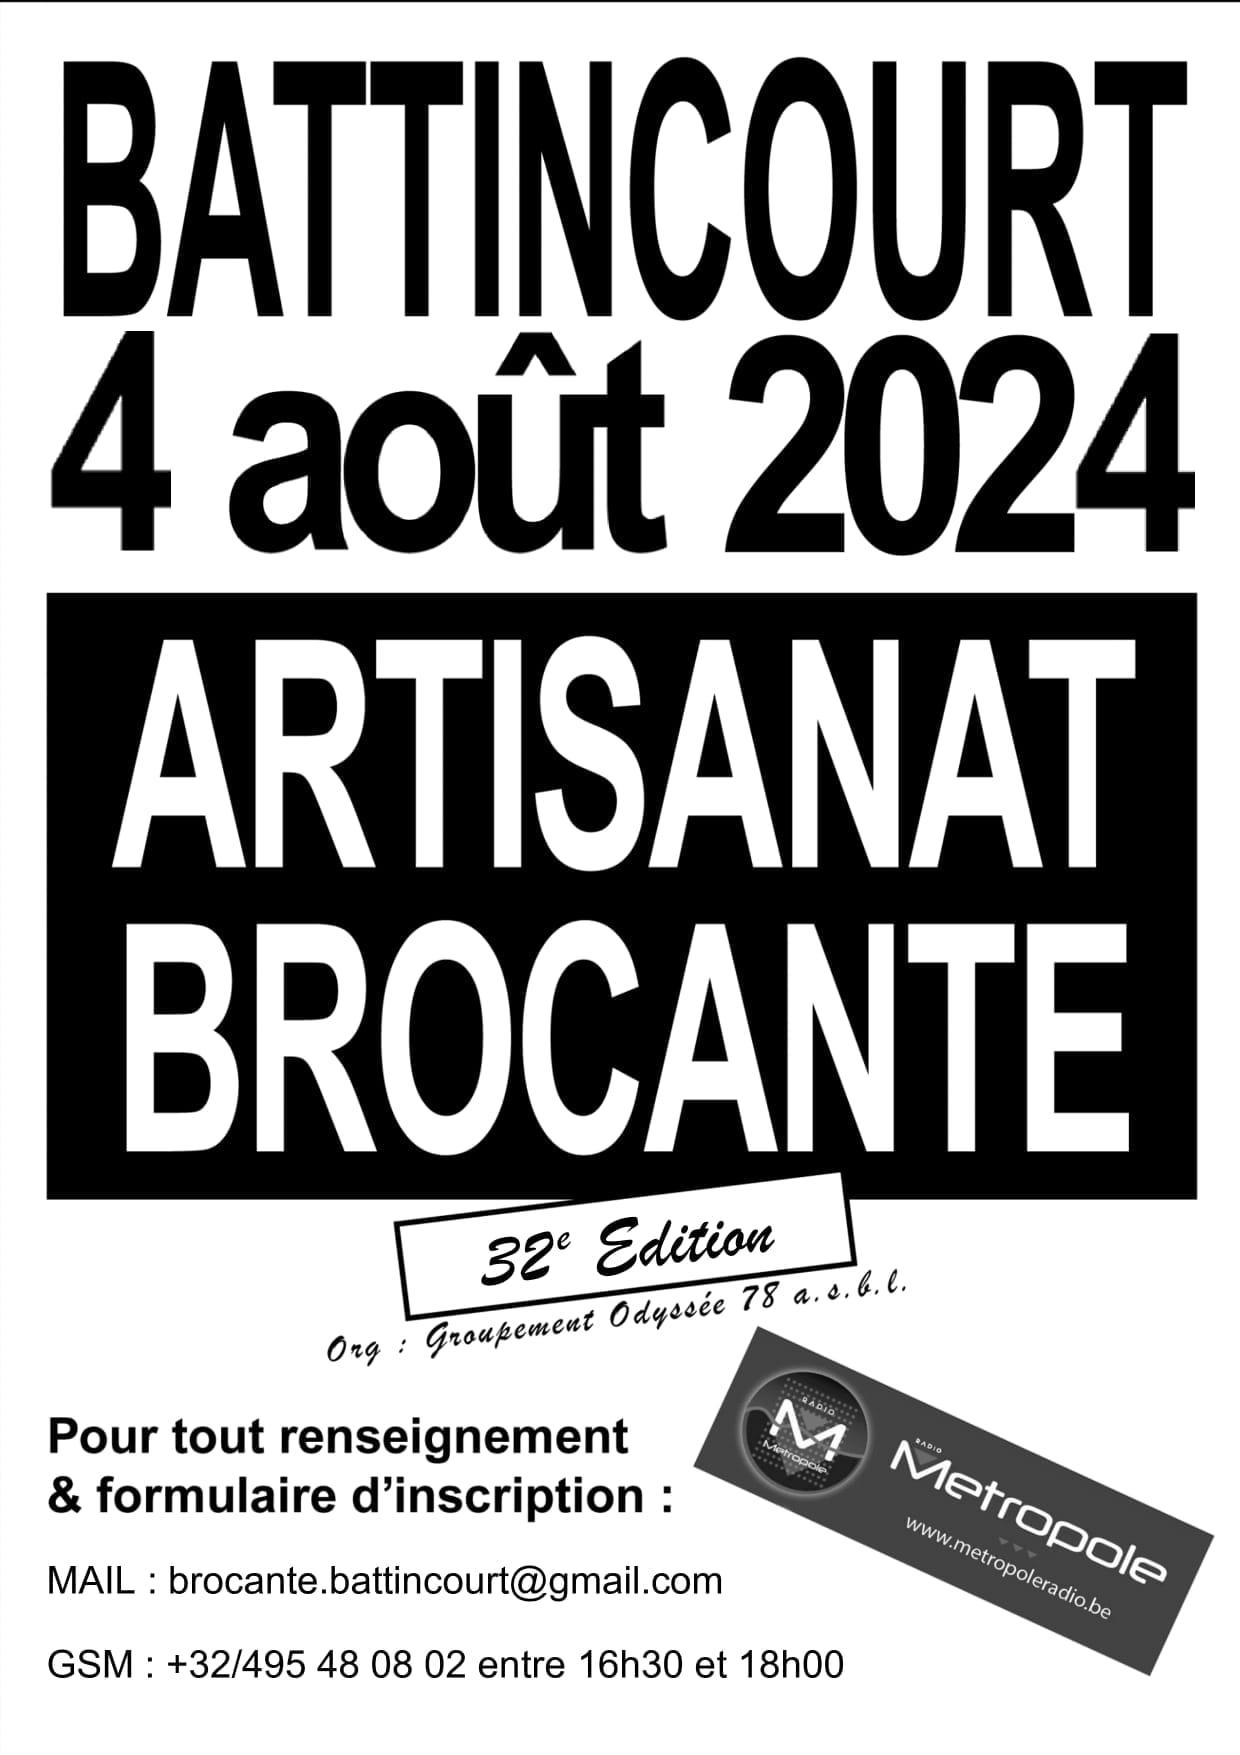 Artisanat & brocante à Battincourt